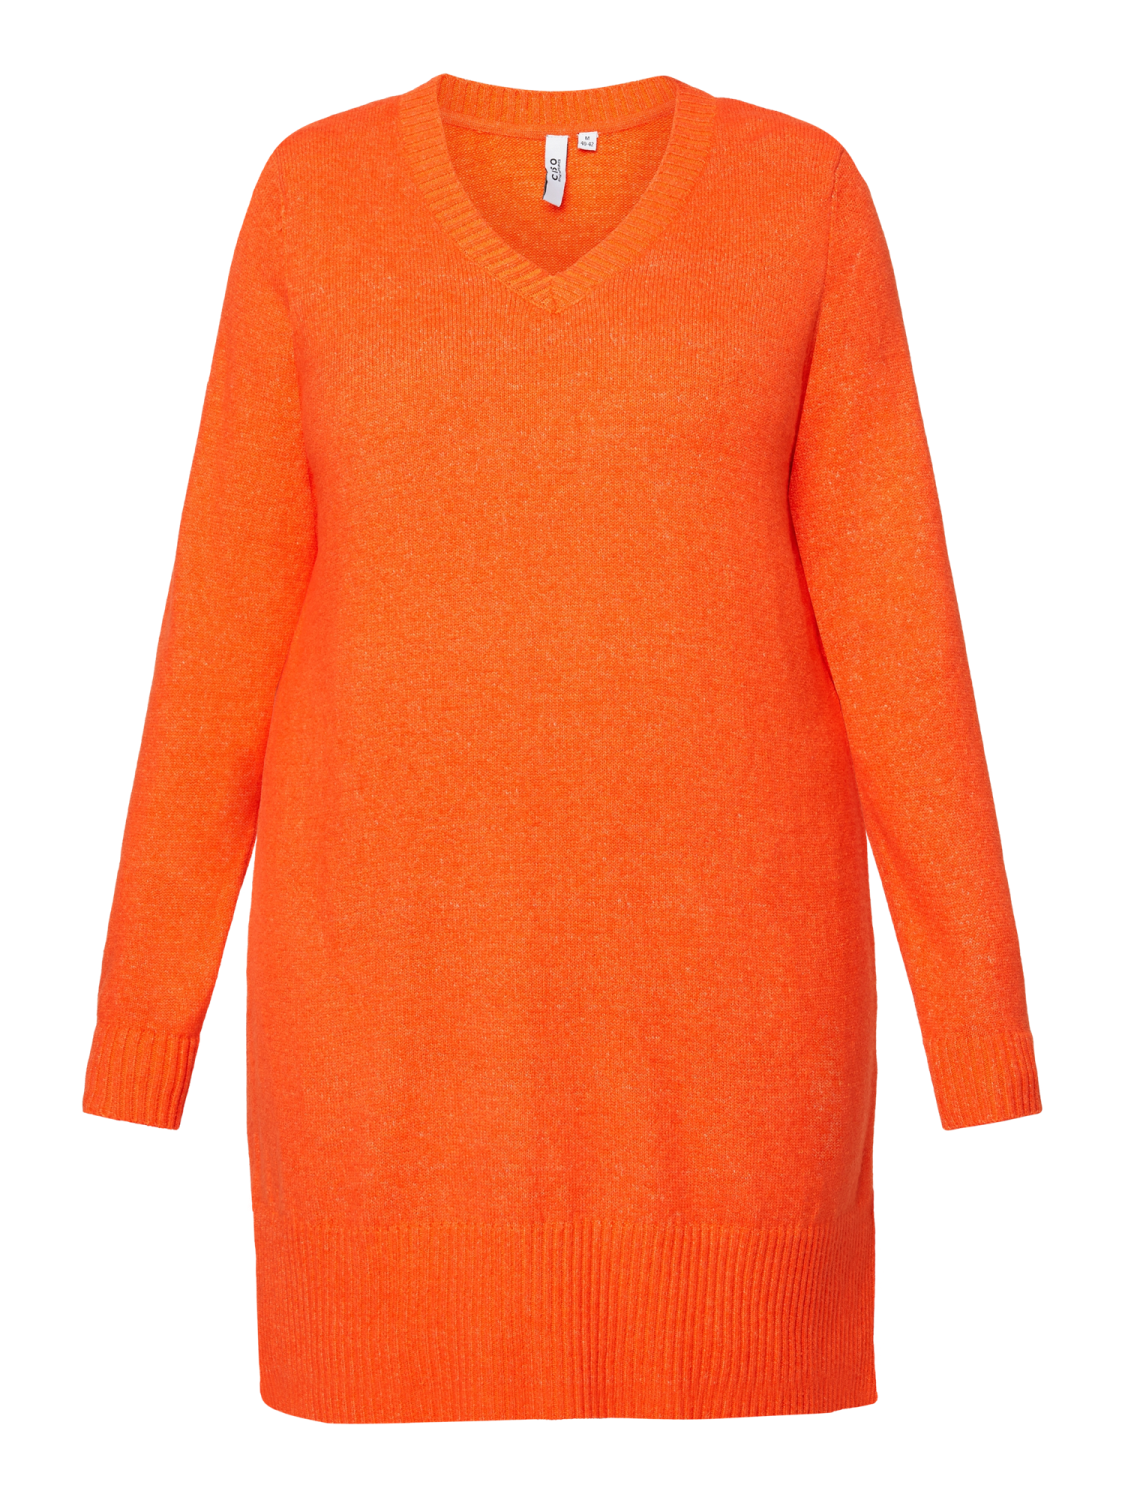 Ciso Tunic Knit, strikket tunika, oransje